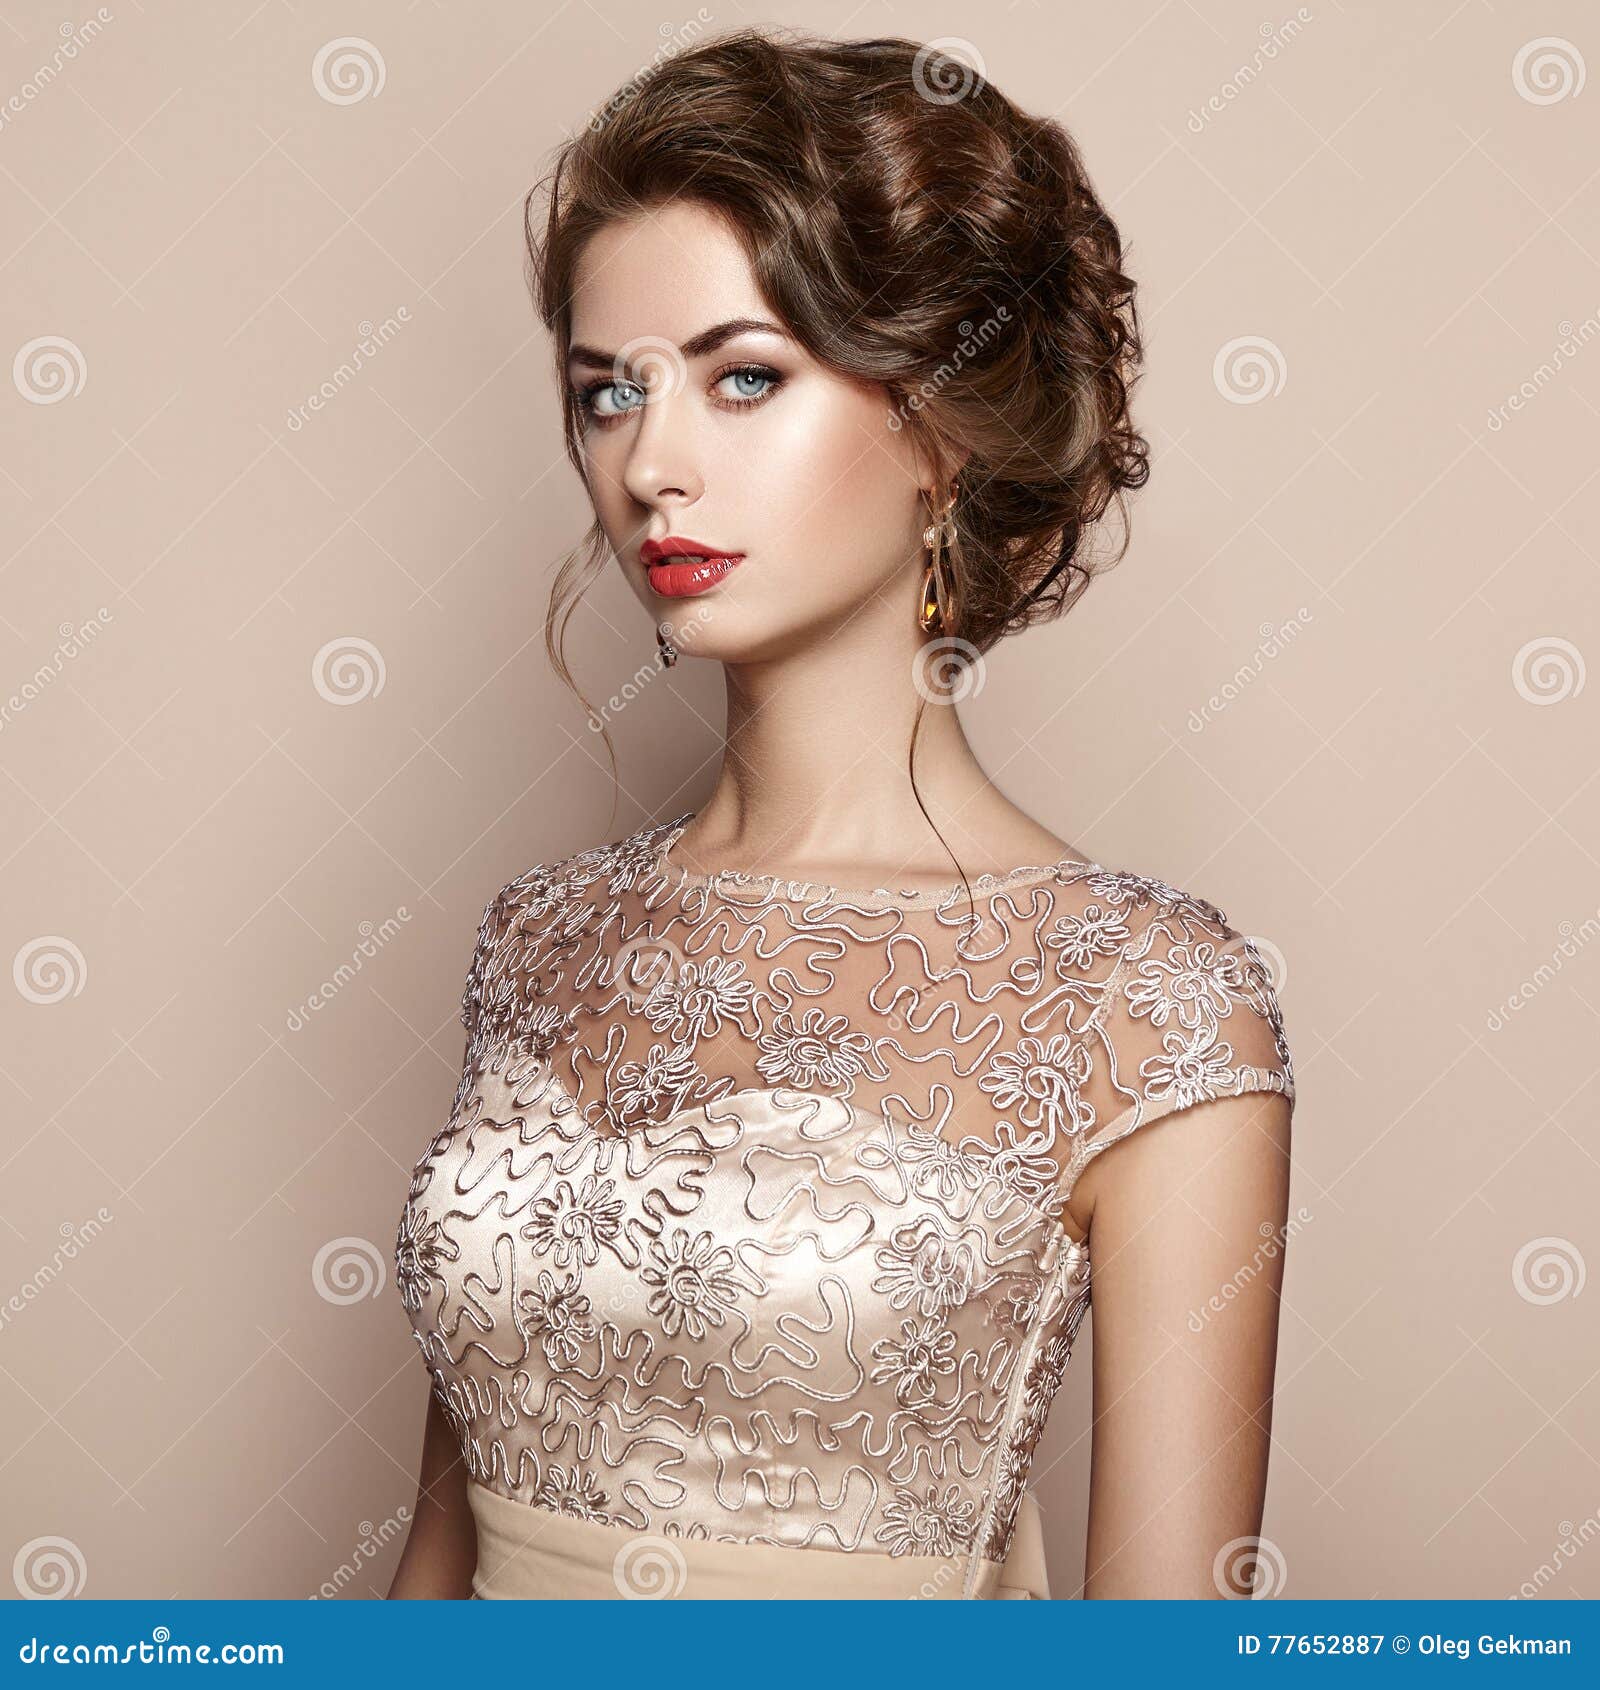 https://thumbs.dreamstime.com/z/fashion-portrait-beautiful-woman-elegant-dress-girl-hairstyle-jewelry-77652887.jpg